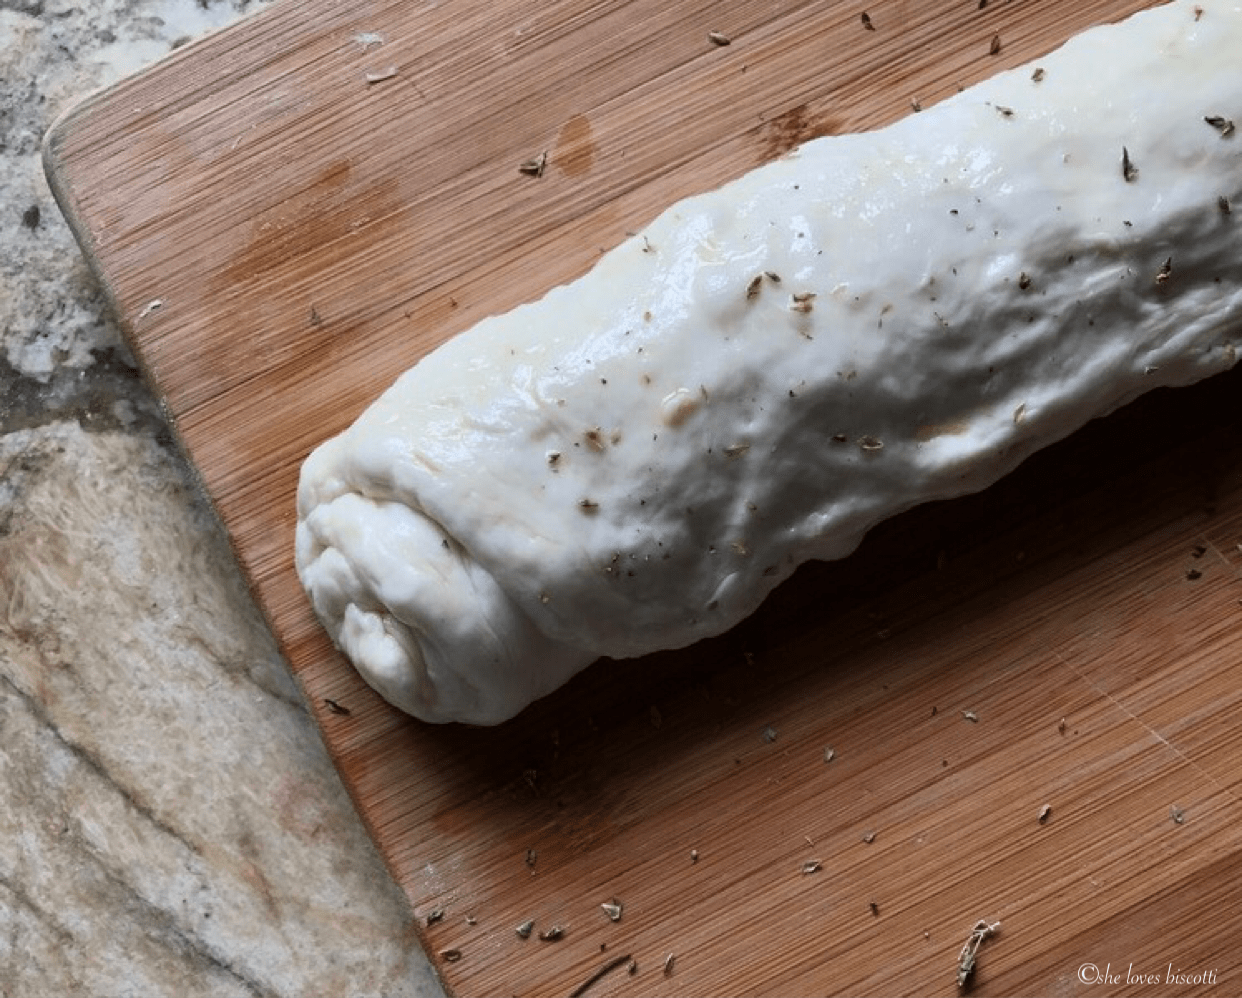 Homemade Havarti Cheese Pizza Dough Rolls